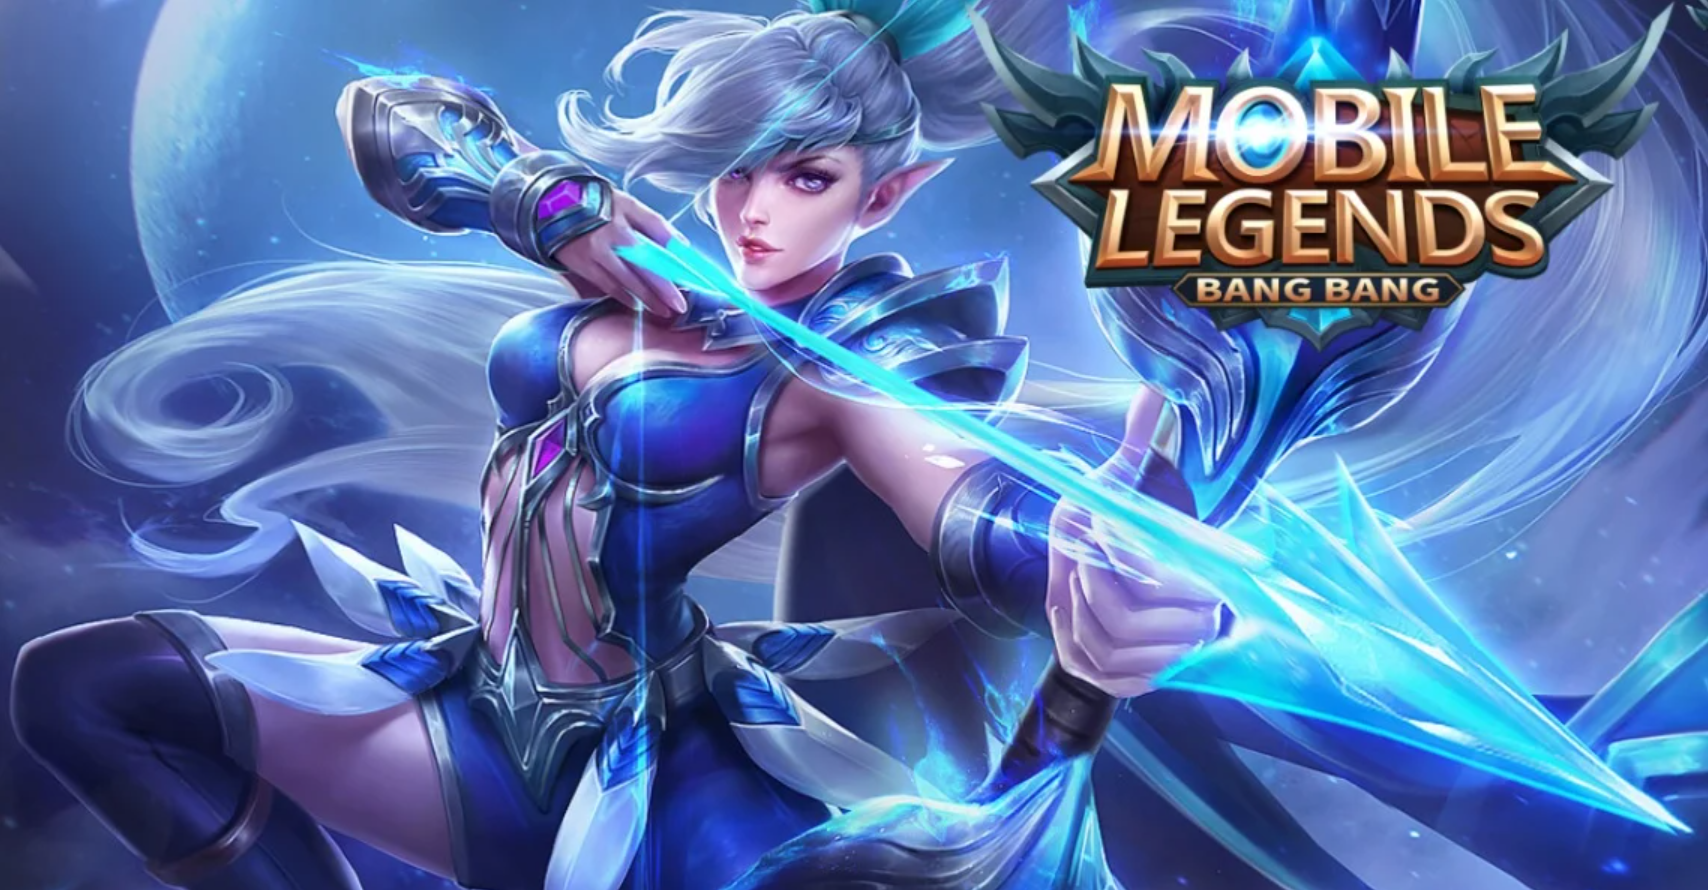 League of Legends developer suing Mobile Legends for copyright